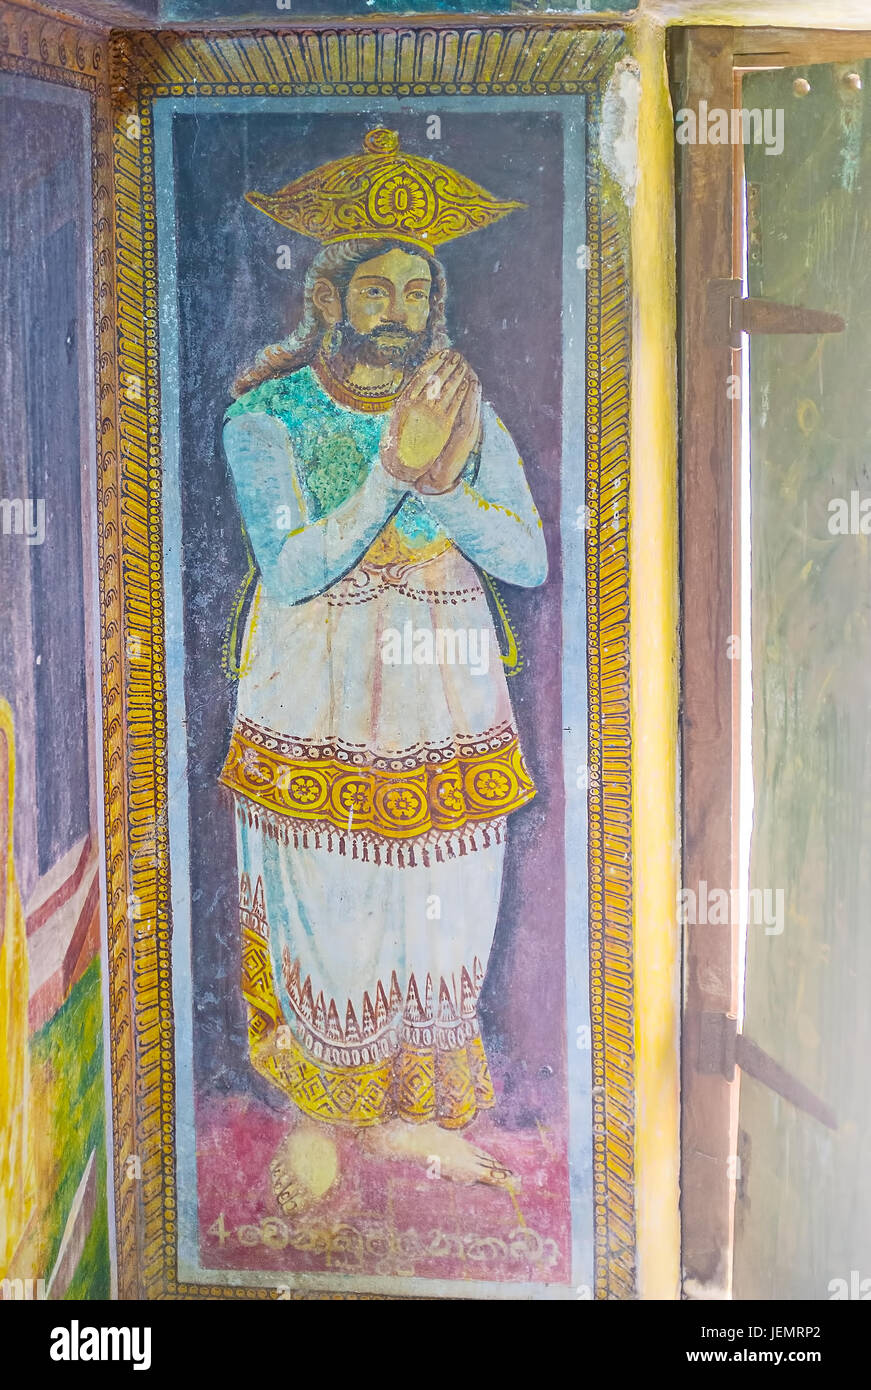 PILIMATHALAWA, SRI LANKA - le 11 novembre 2016 : la fresque avec le roi priant dans l'image de maison Vijayantha Prasada culte de Gadaladeniya Vihara Banque D'Images